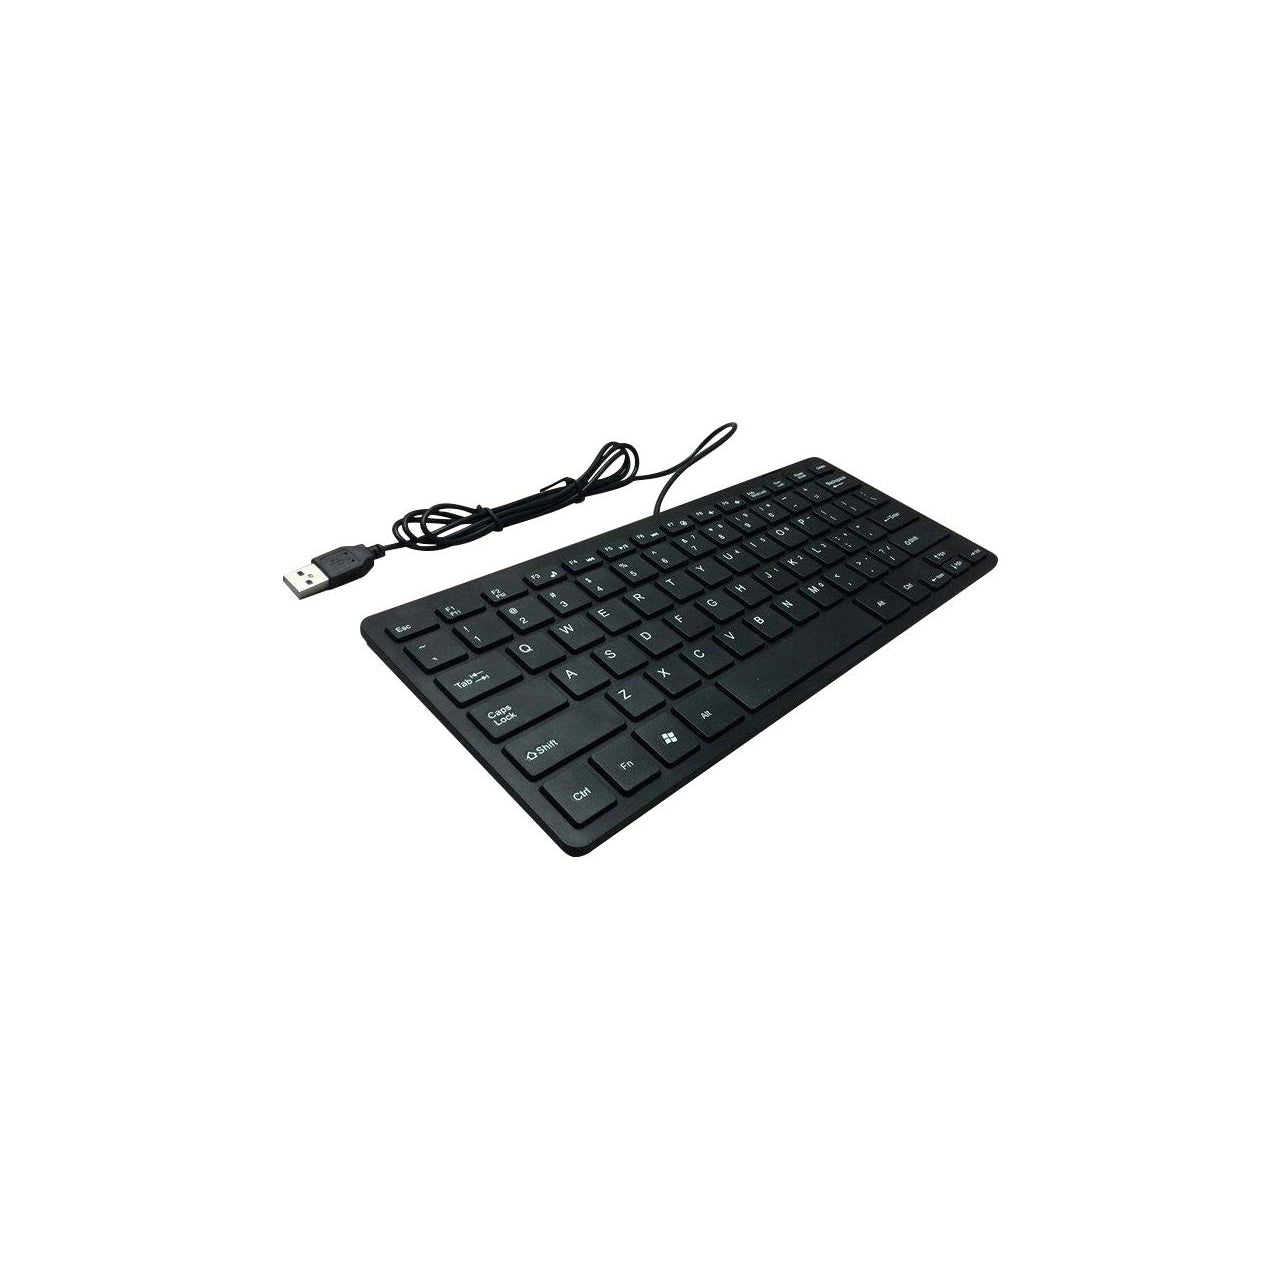 Rigid Water Resistant USB Keyboard